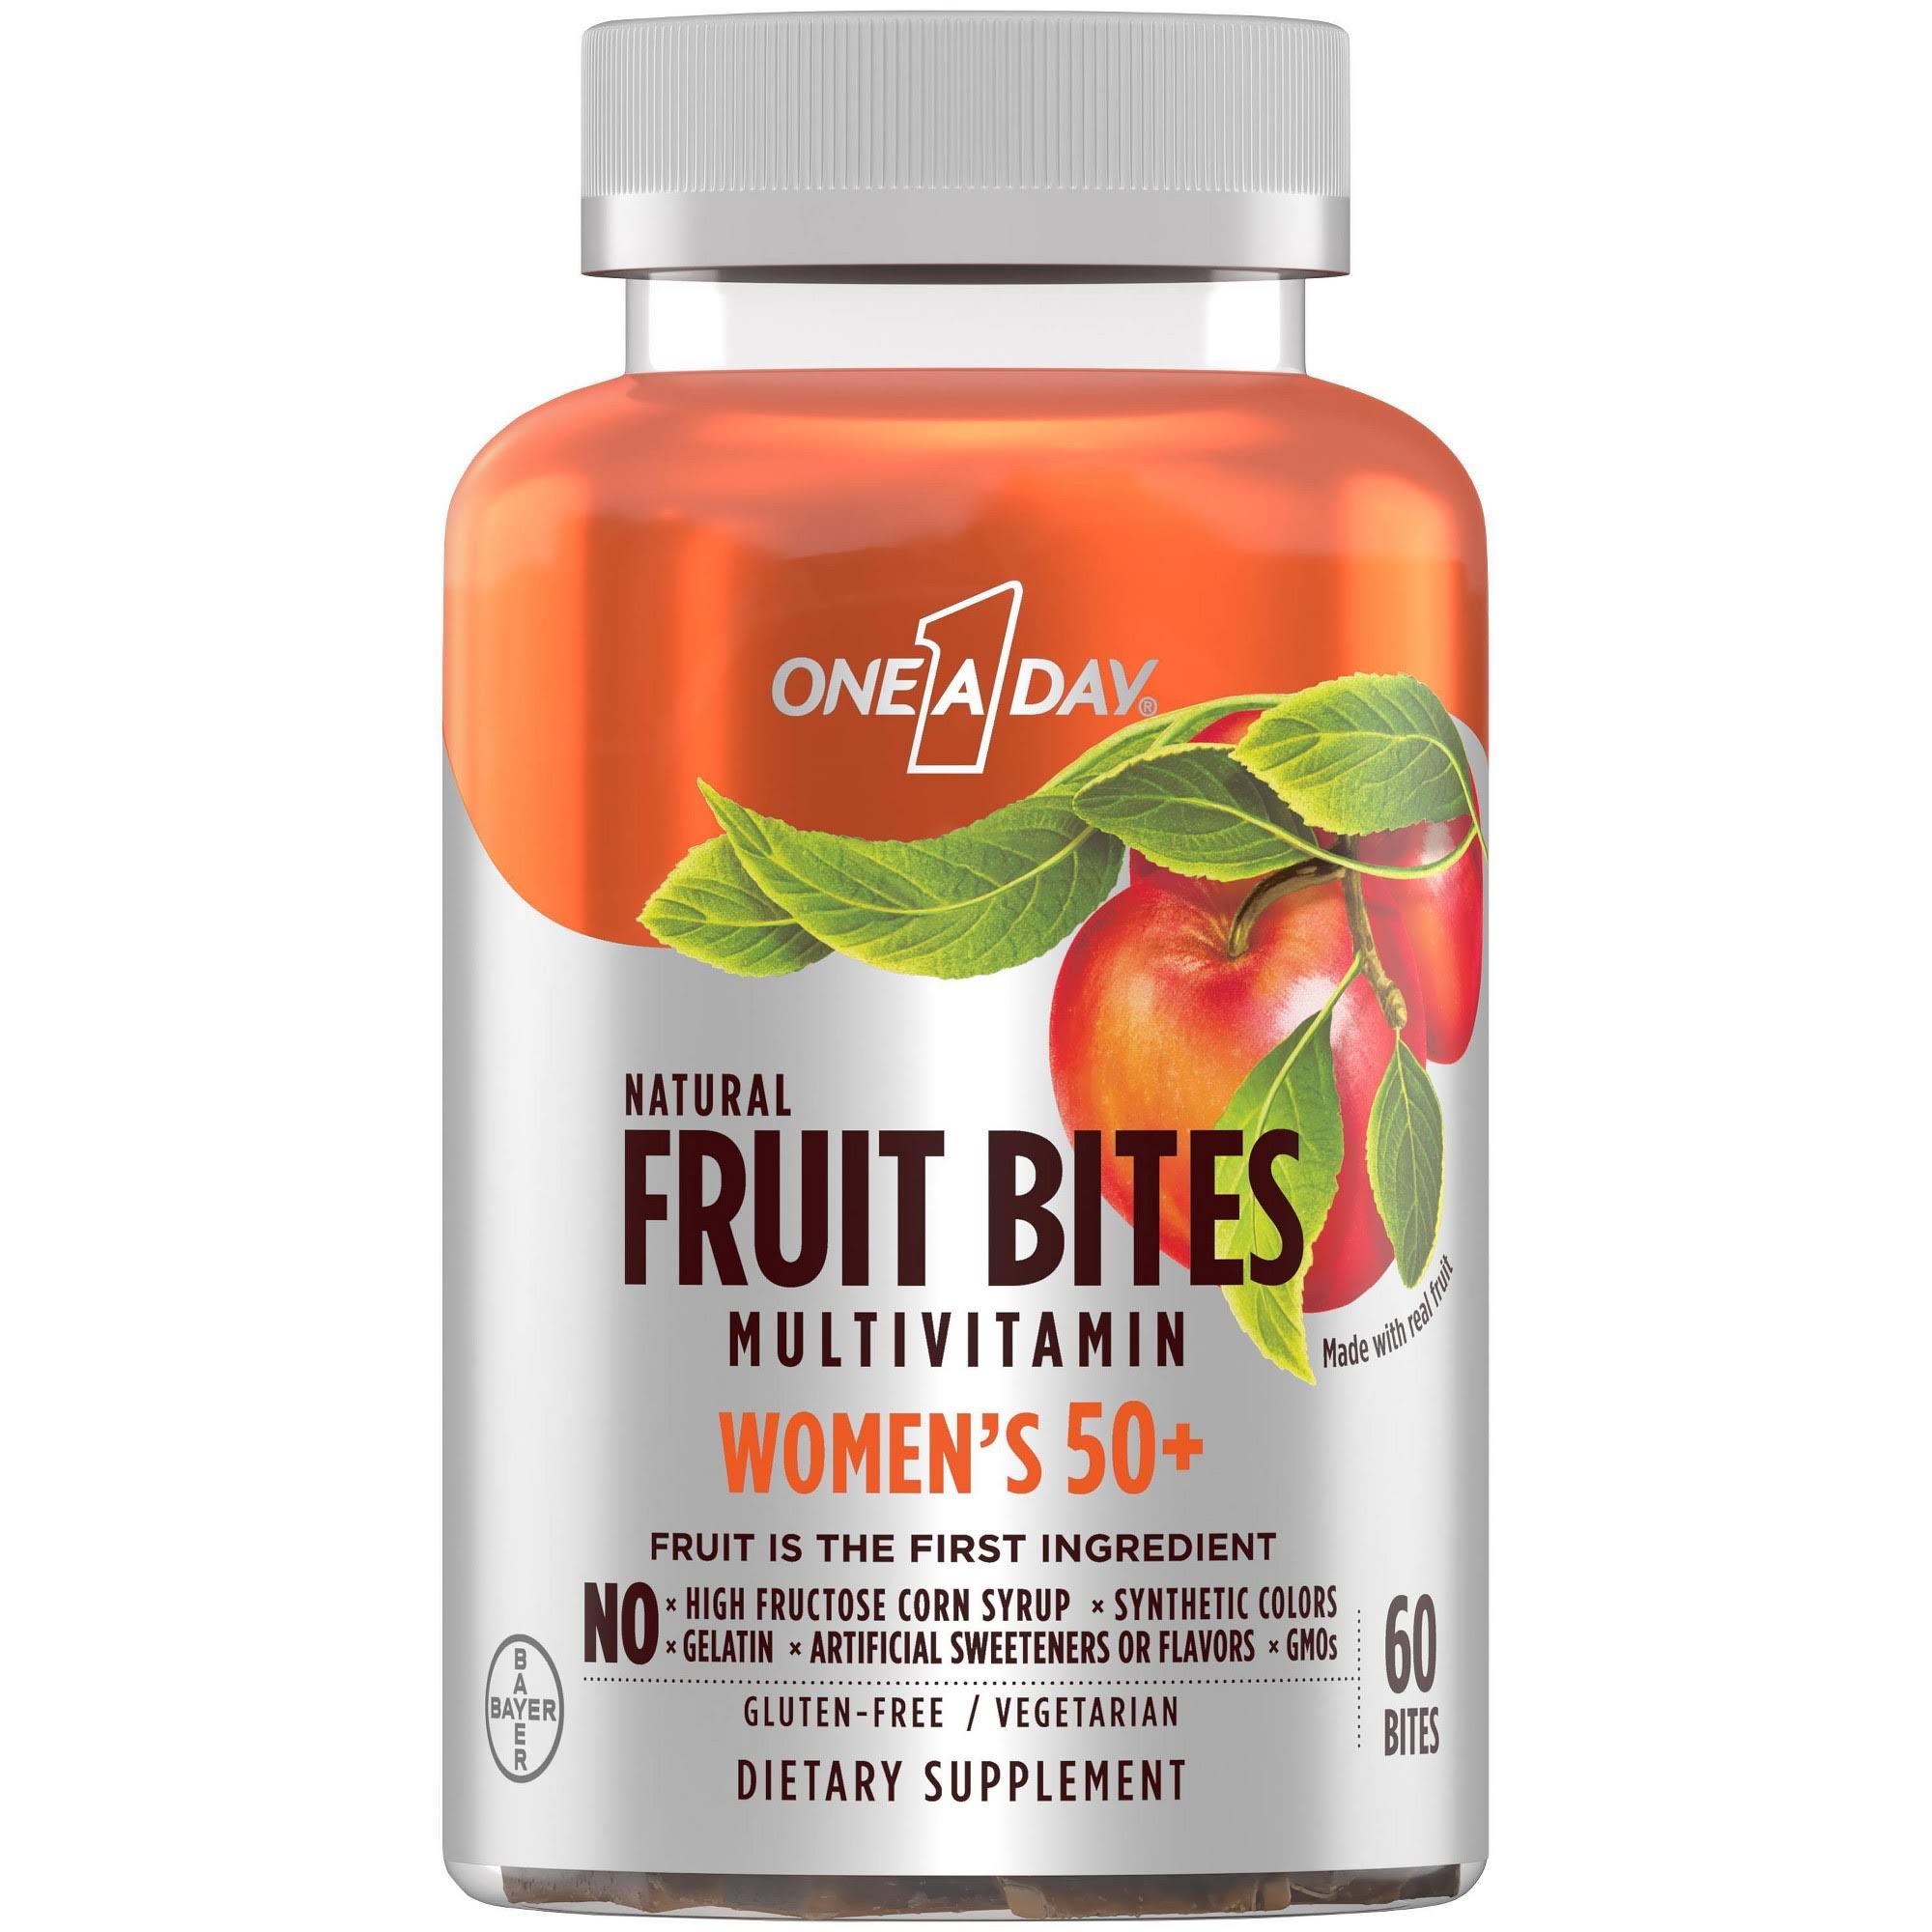 One A Day Multivitamin, Natural, Fruit Bites, Women's 50+ - 60 bites